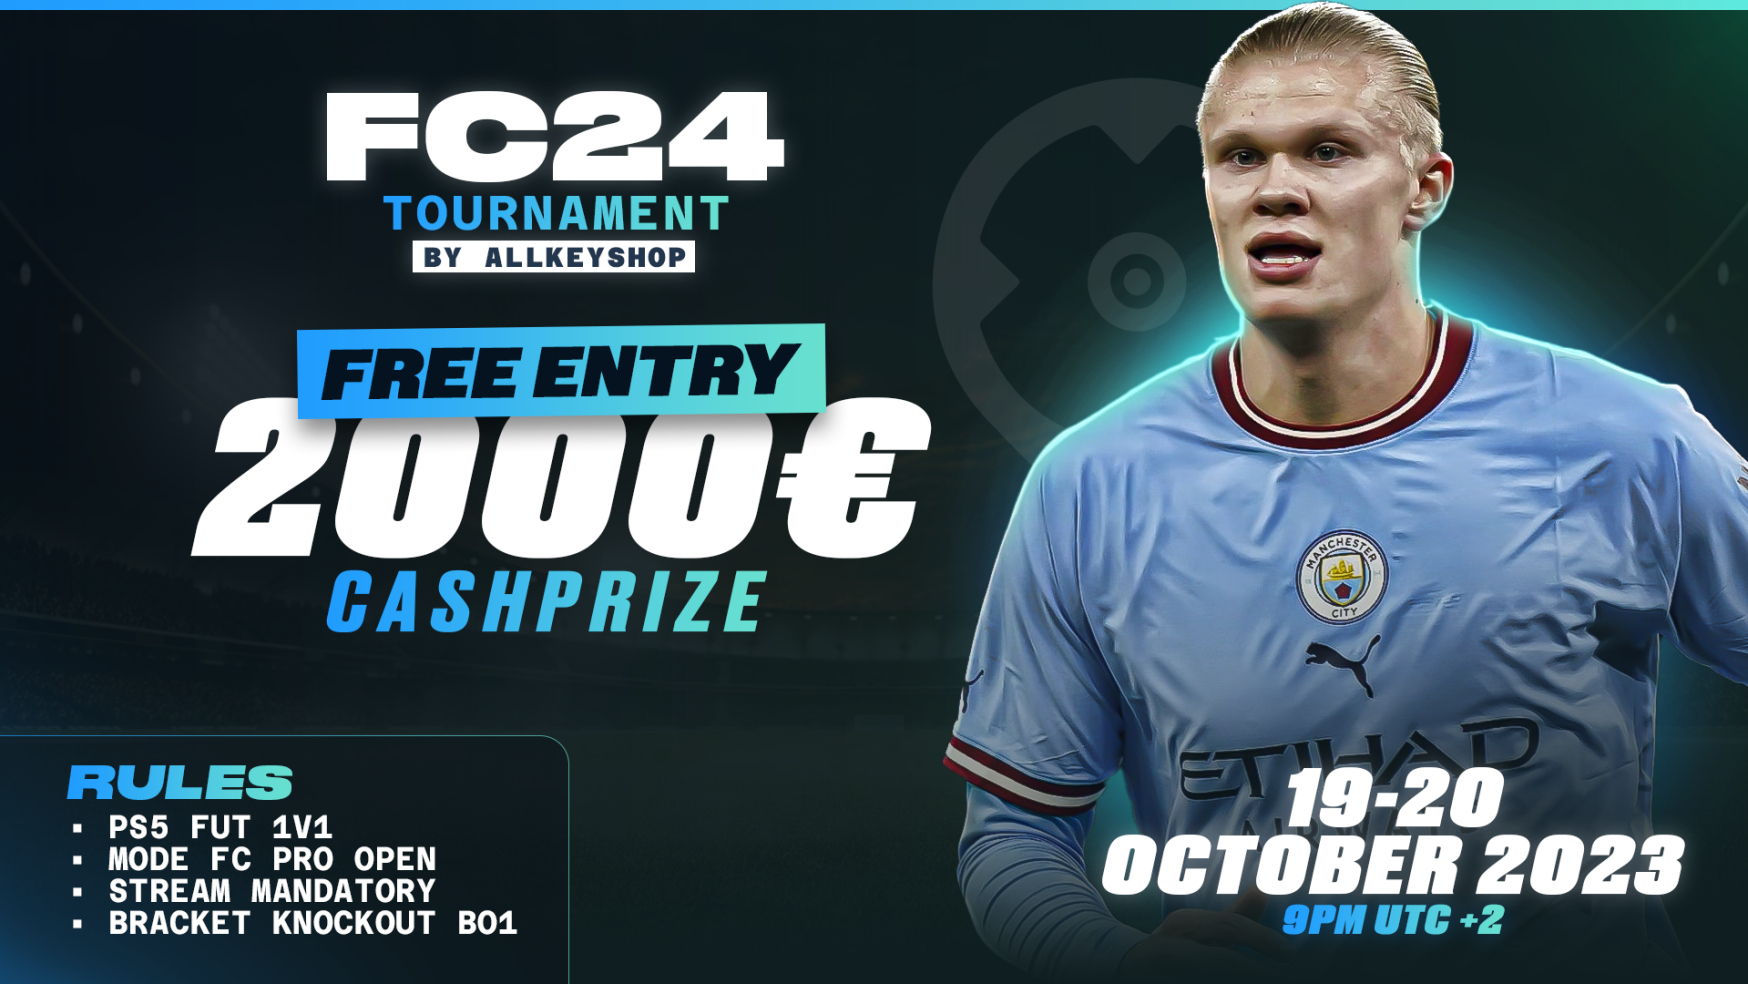 FC 24 Tournament 2023 by Allkeyshop